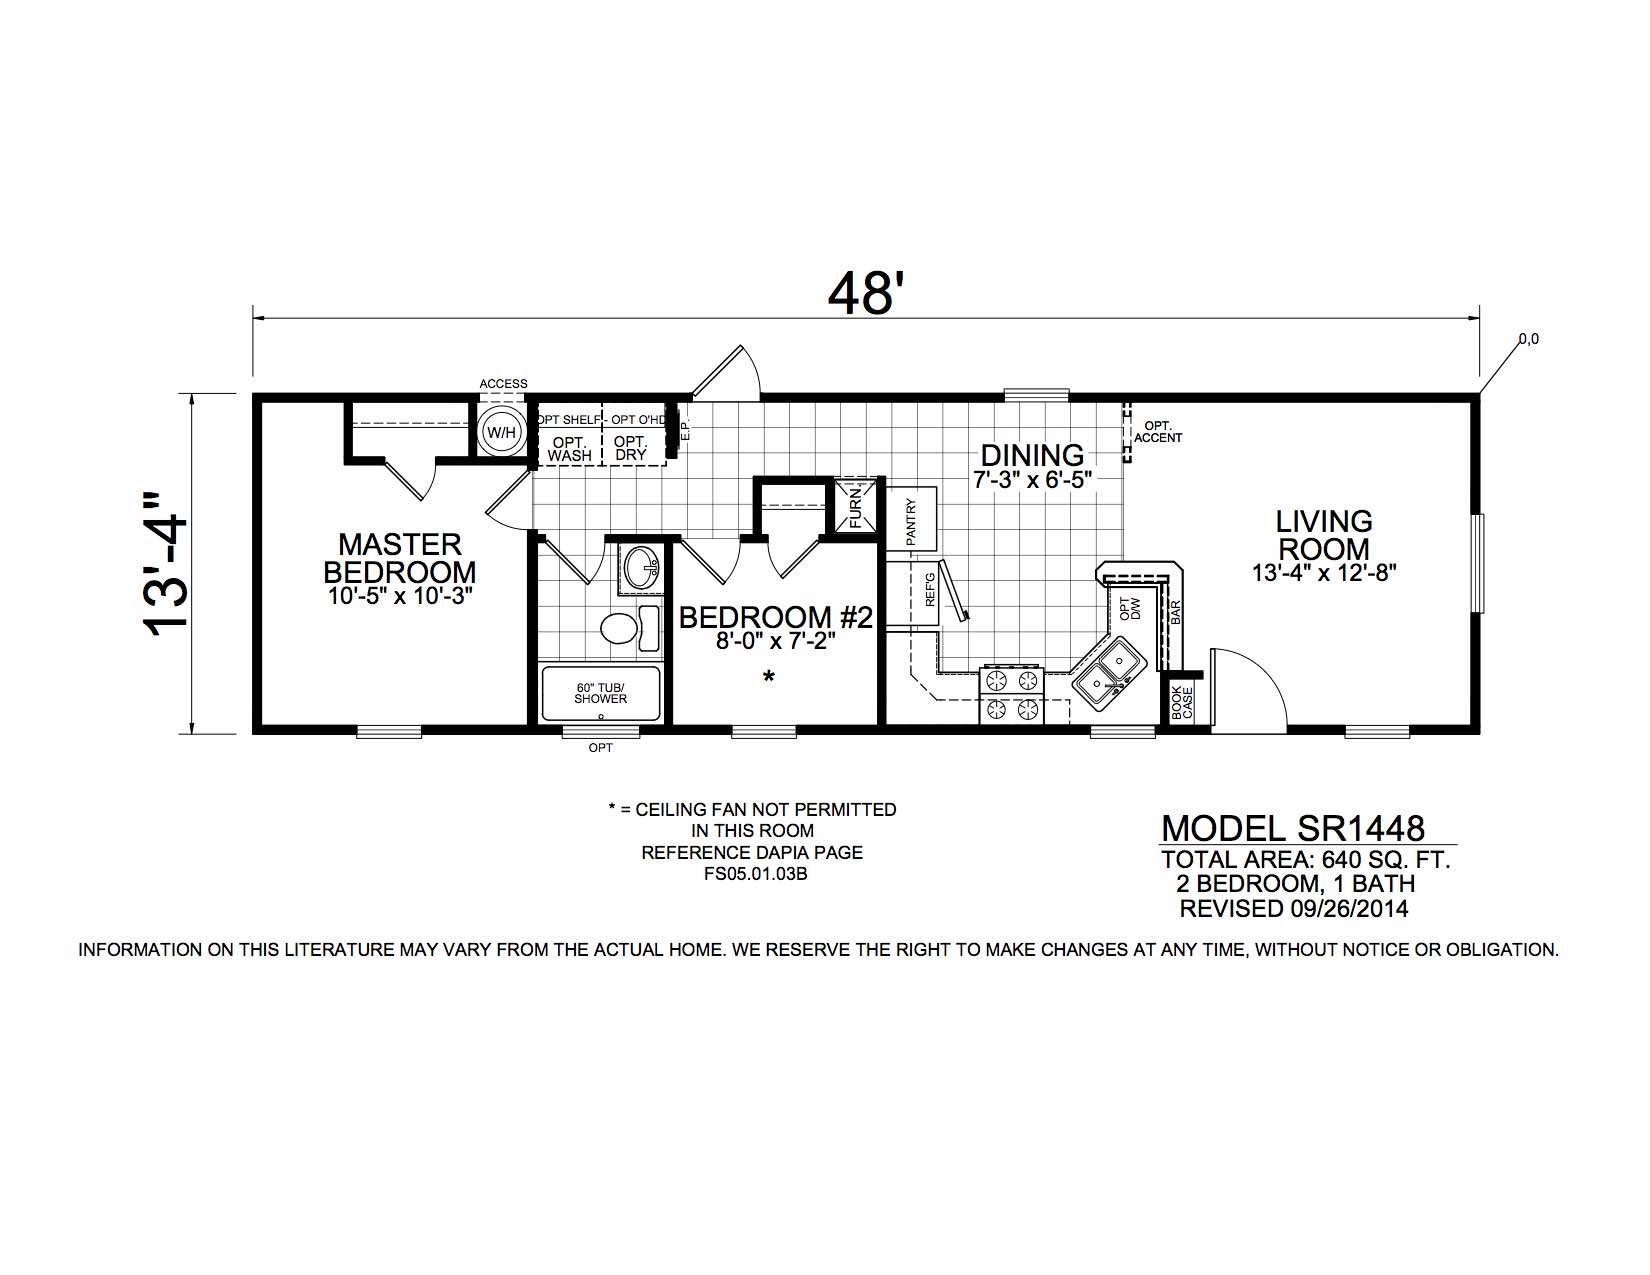 Homes Direct Modular Homes - Model SR1448 - Floorplan